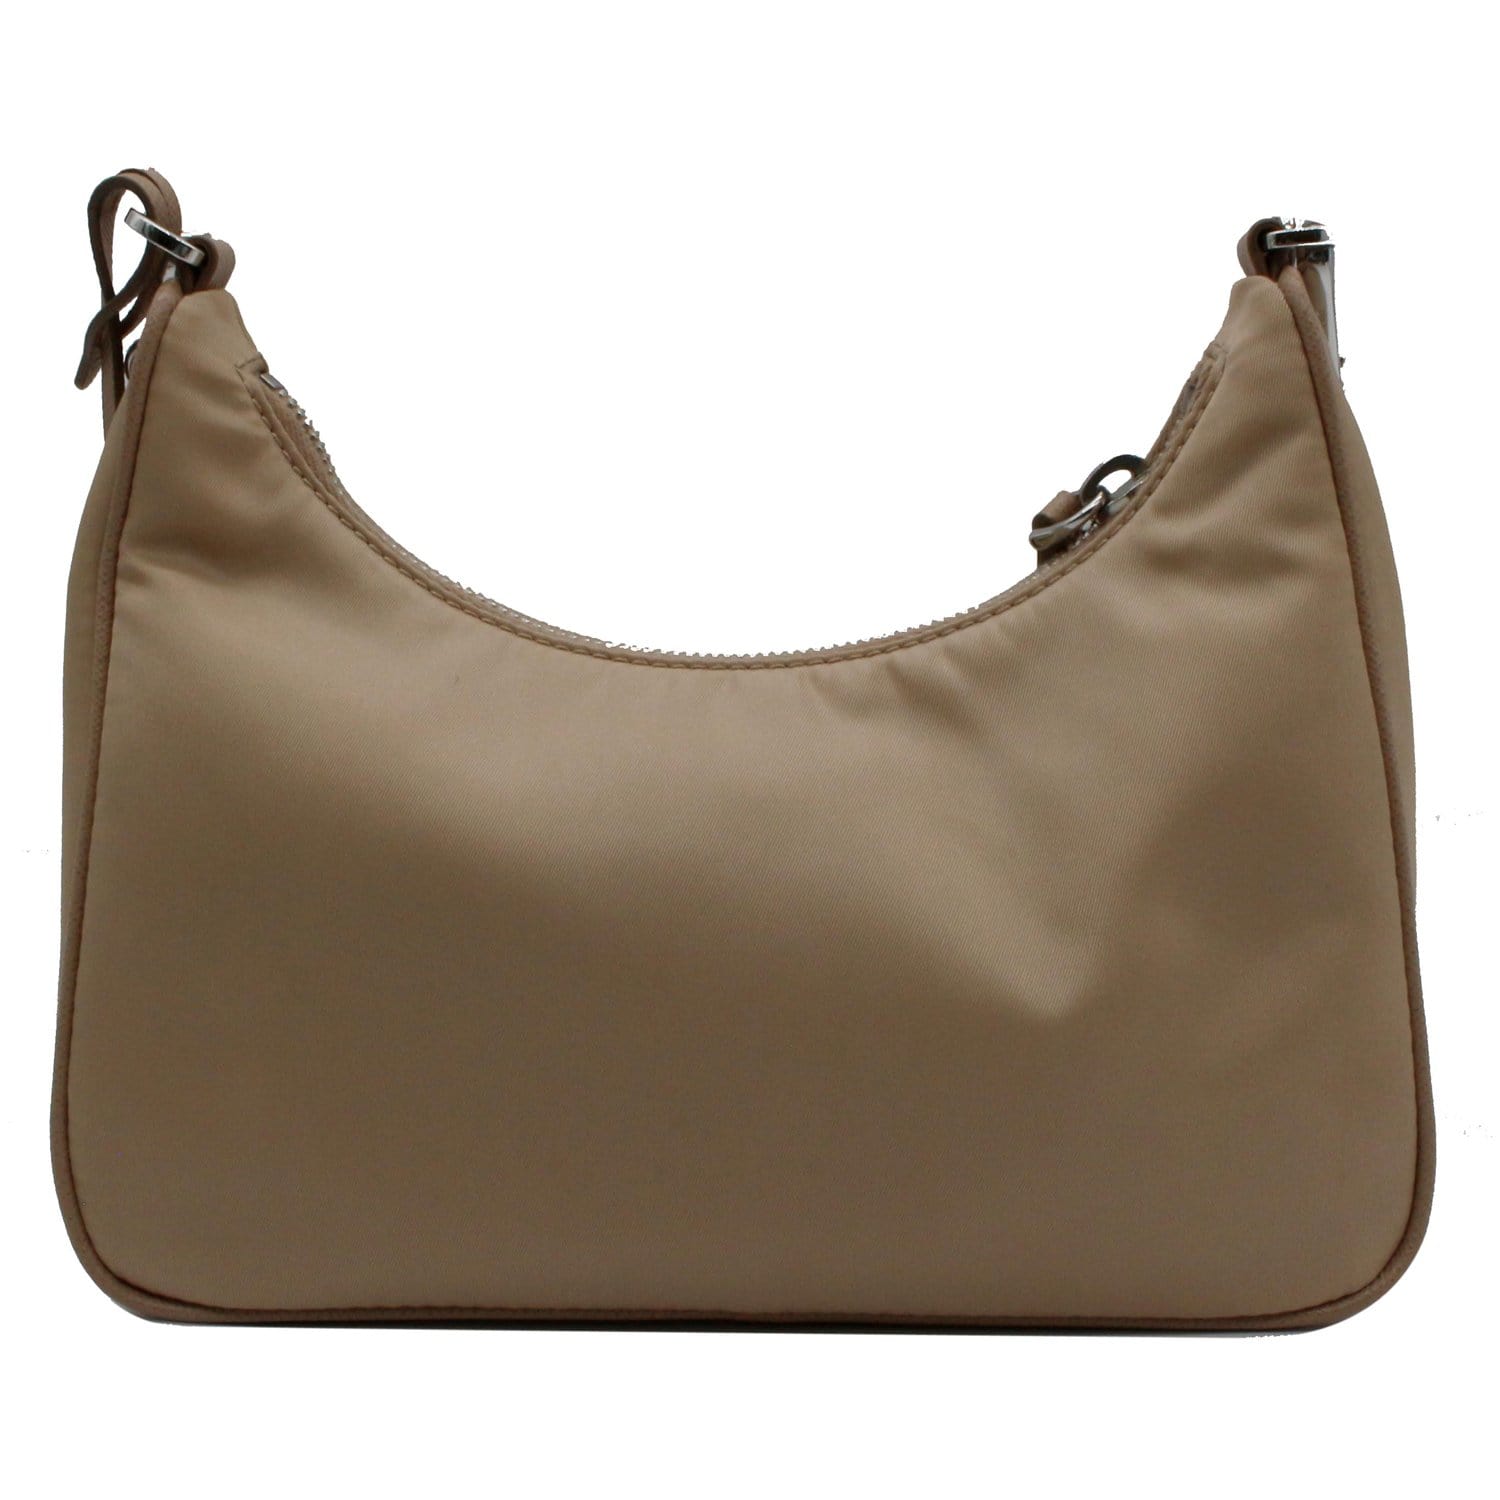 Prada Re-Edition 2005 Shoulder Bag Desert Beige in Re-Nylon with  Silver-tone - US